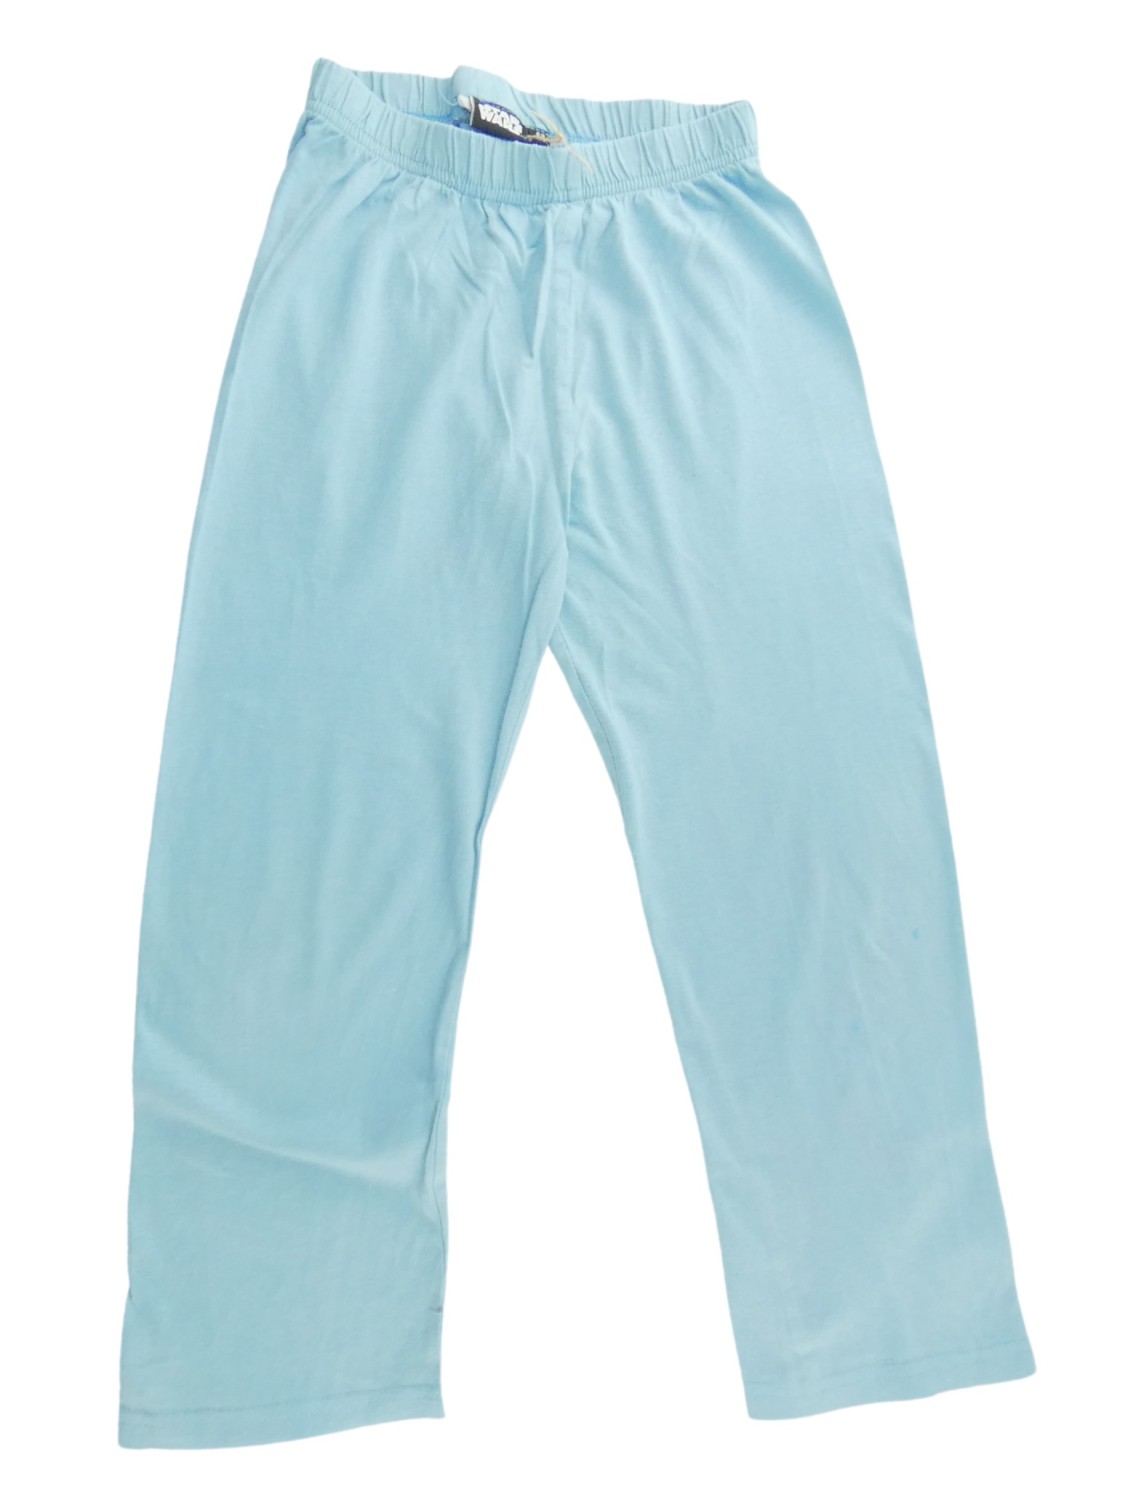 Pantalon bas de pyjama bleu uni STAR WARS taille 6ans